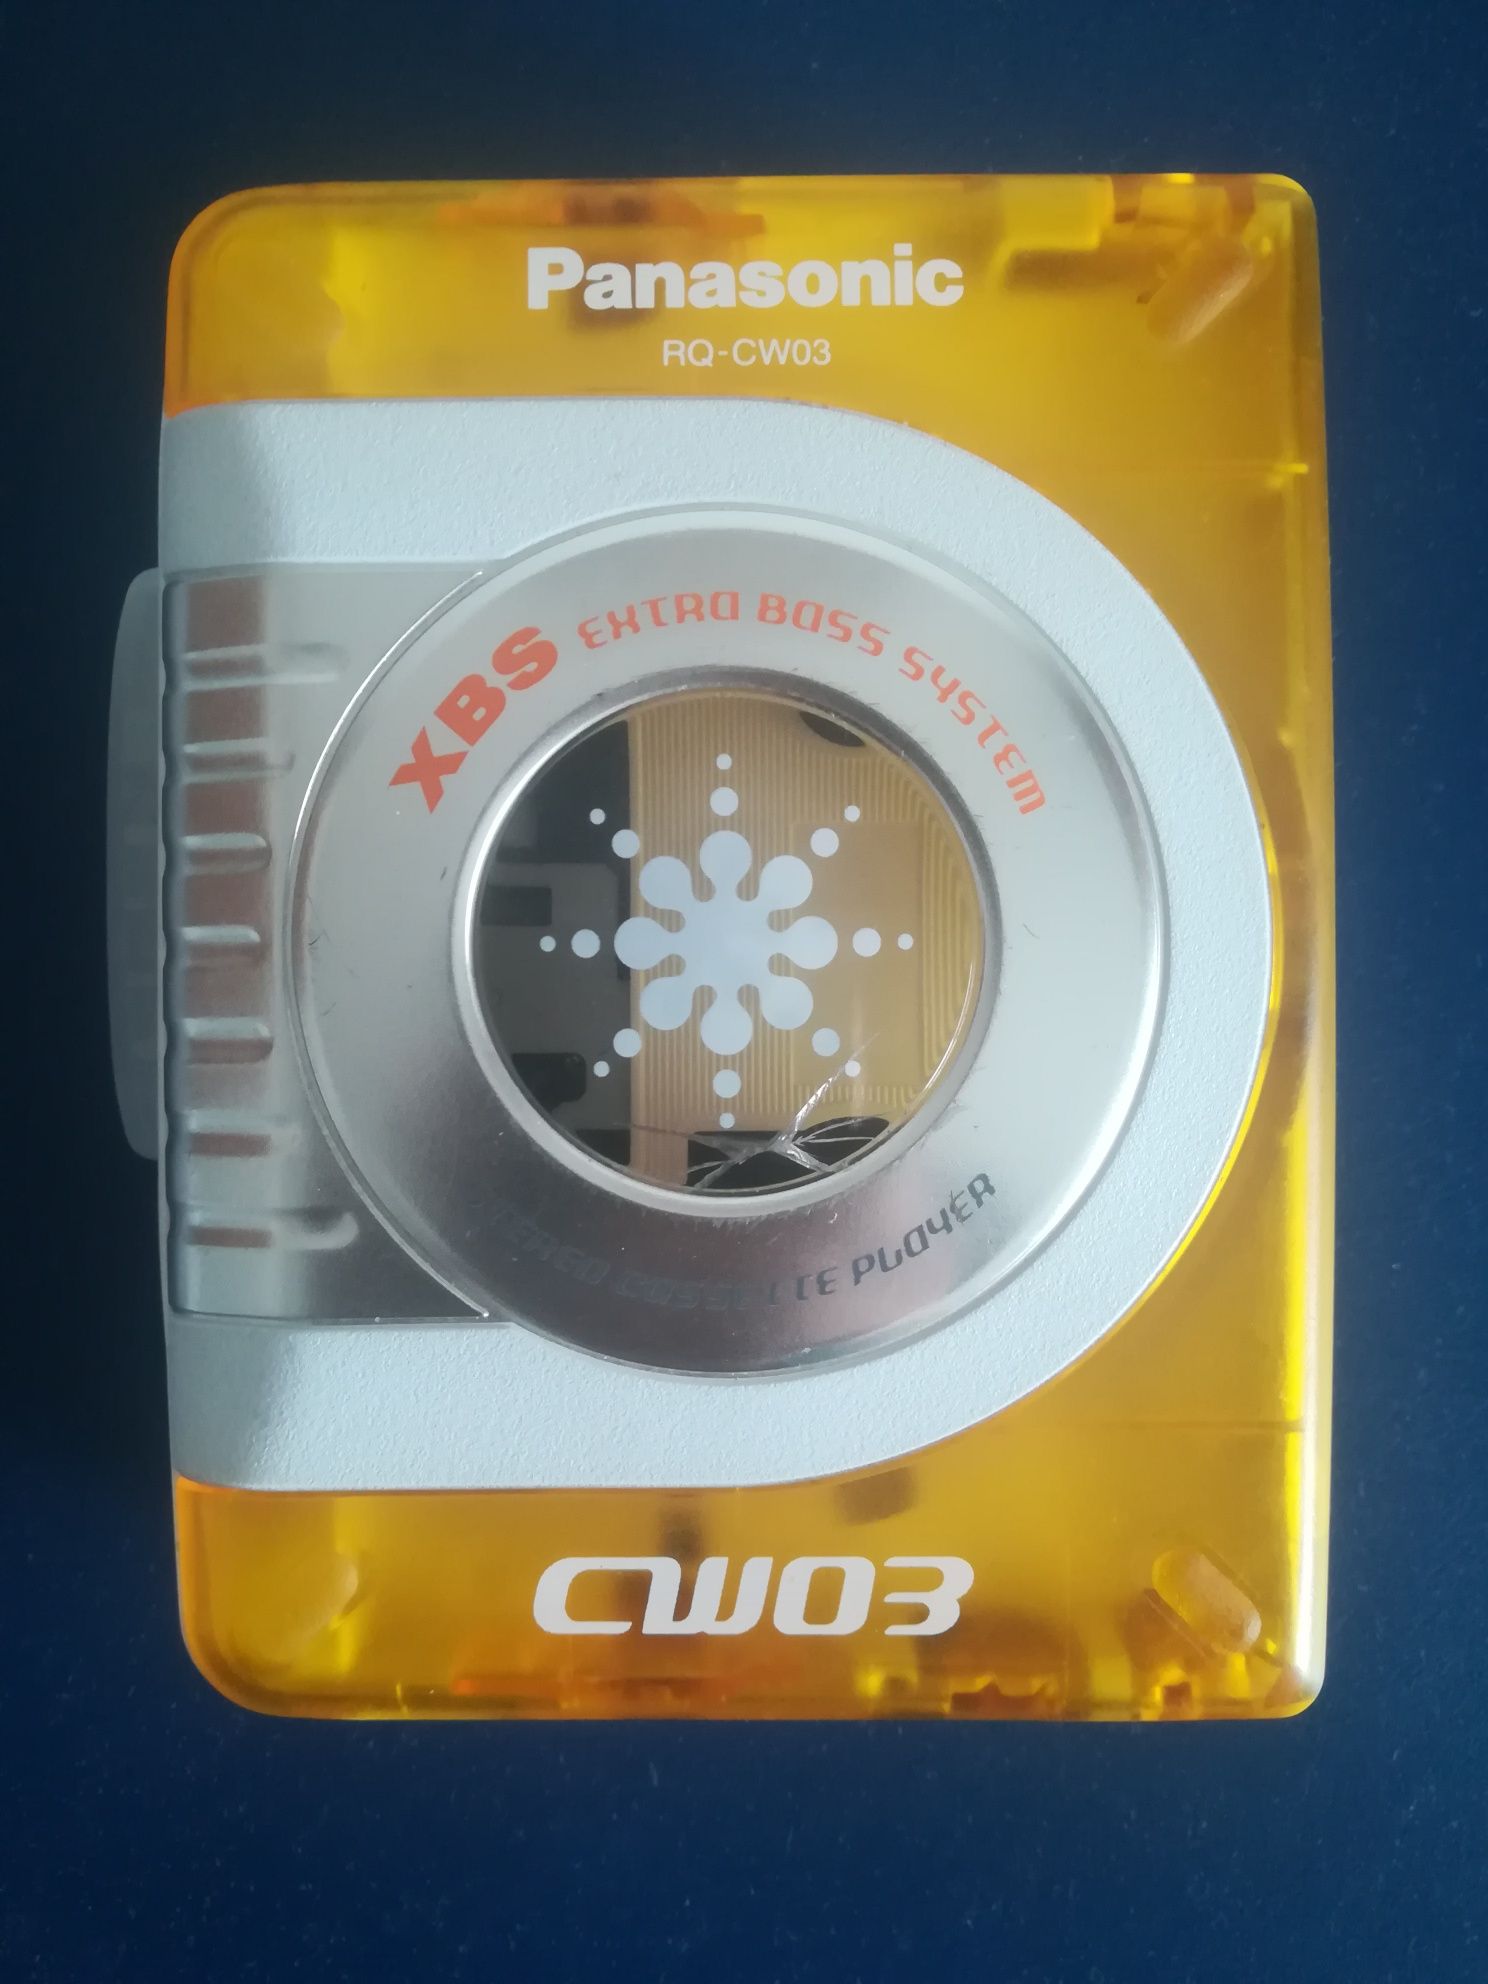 Walkman Panasonic RQ-CW03 amarelo